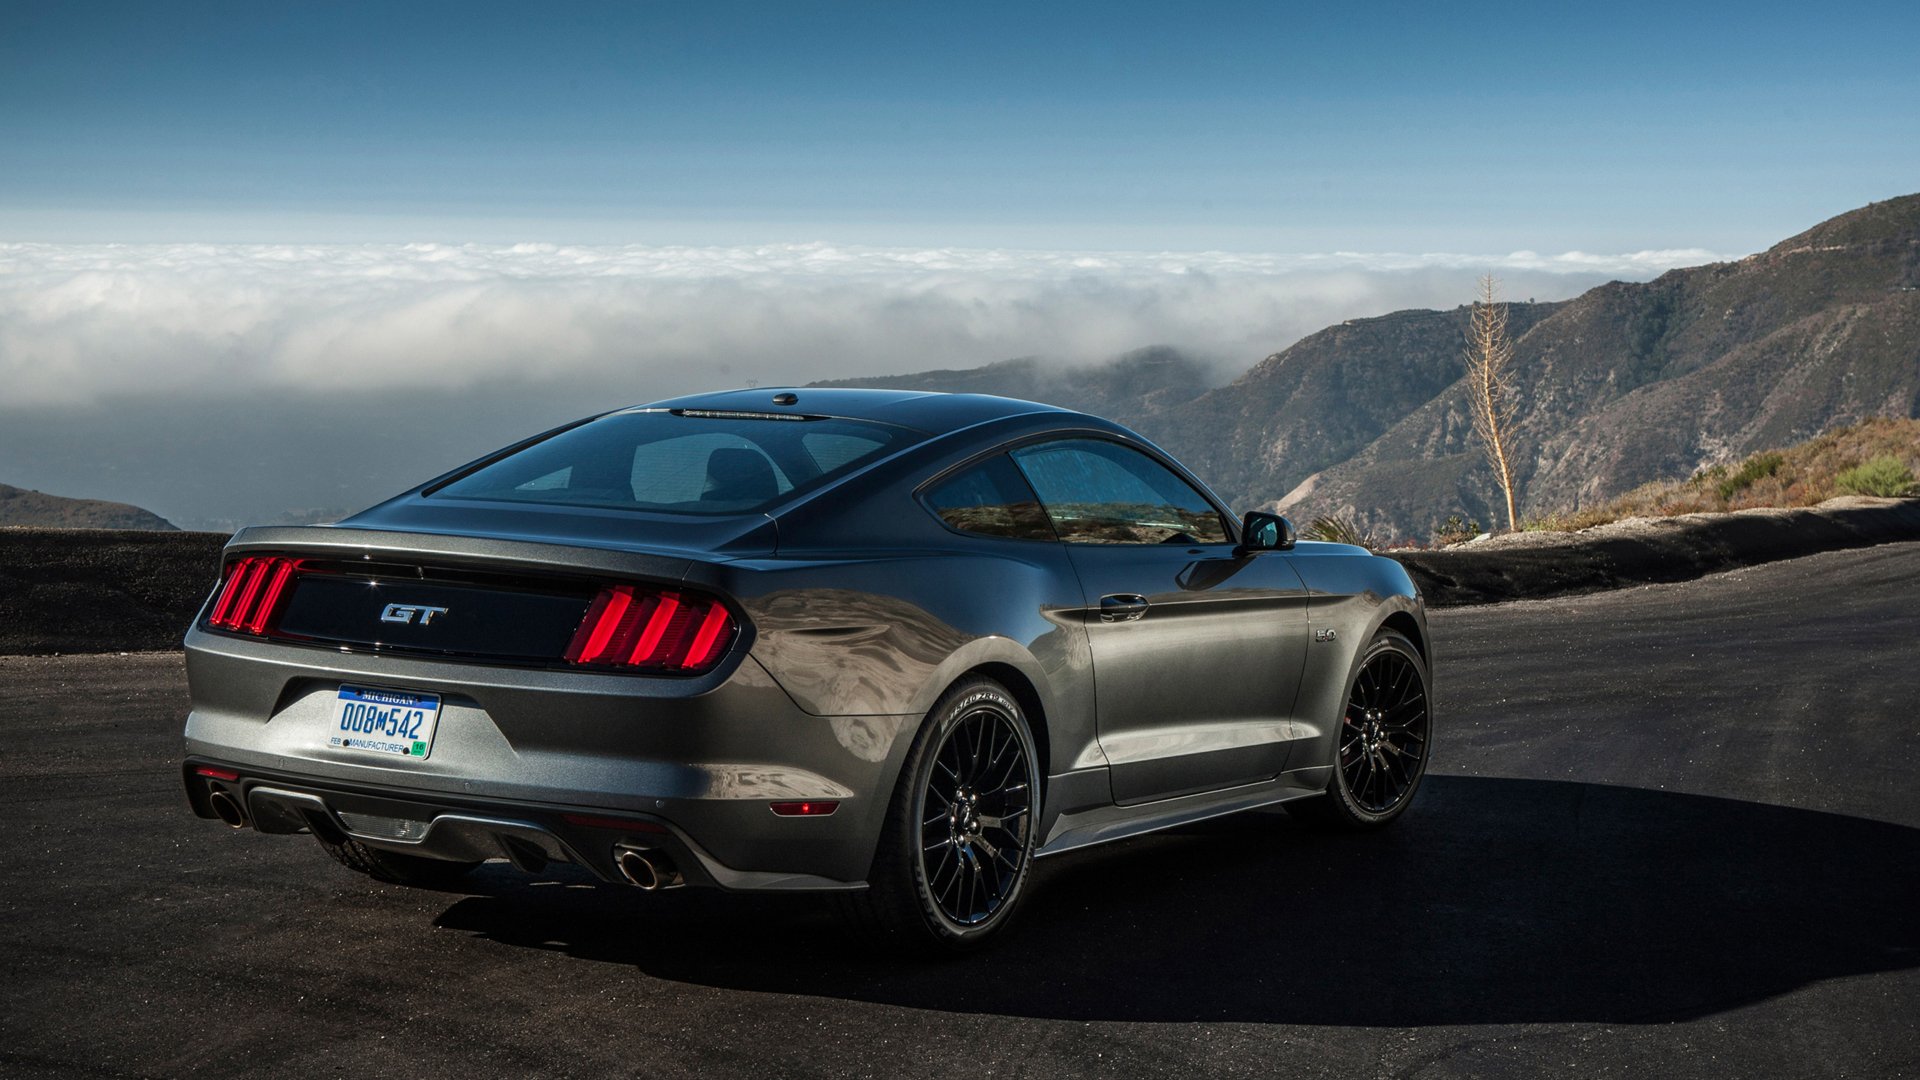 [43+] 2015 Mustang GT Wallpaper HD on WallpaperSafari
 2015 Ford Mustang Wallpaper Hd